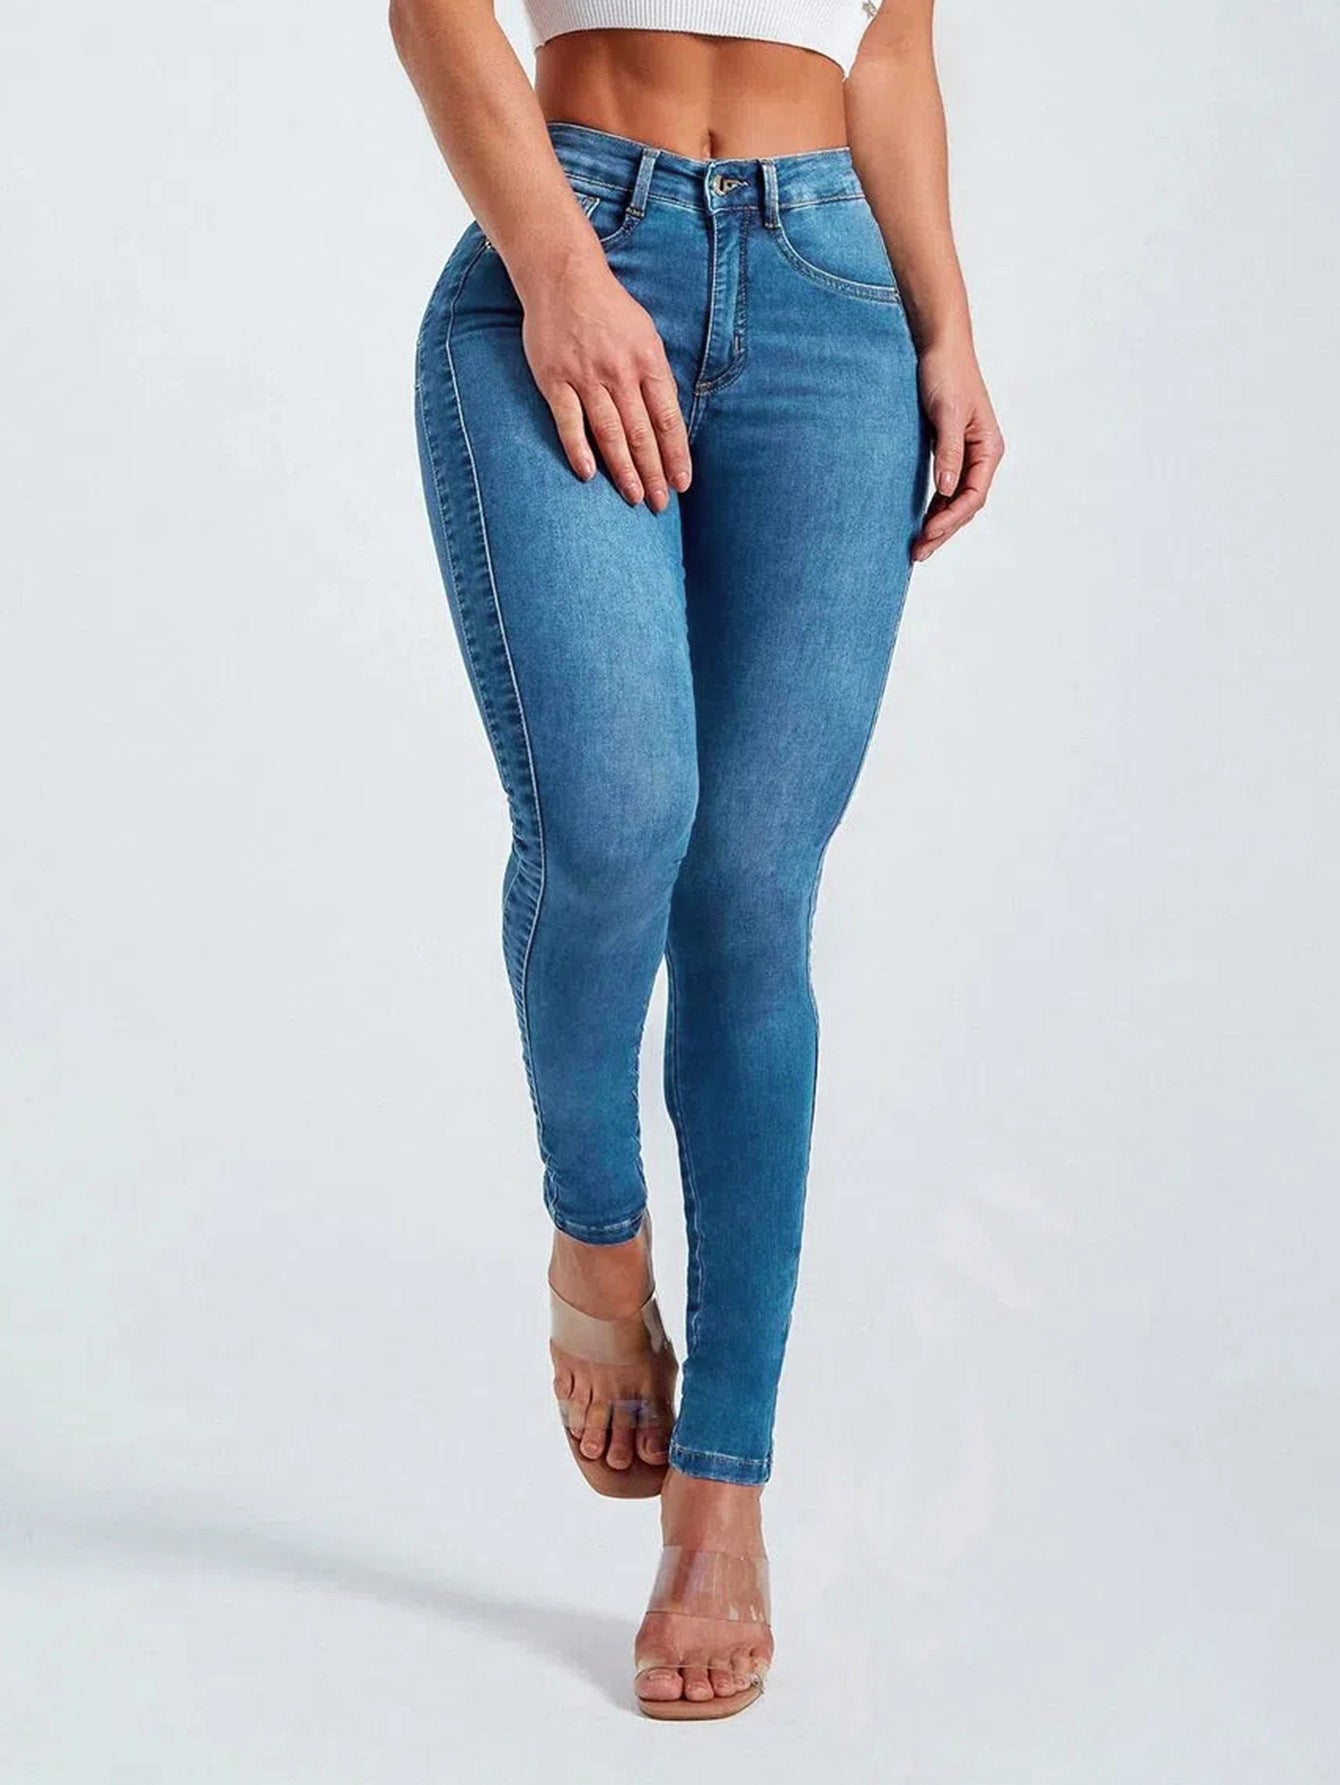 Women's Spring Slim Fit Skinny Stretch High Jeans